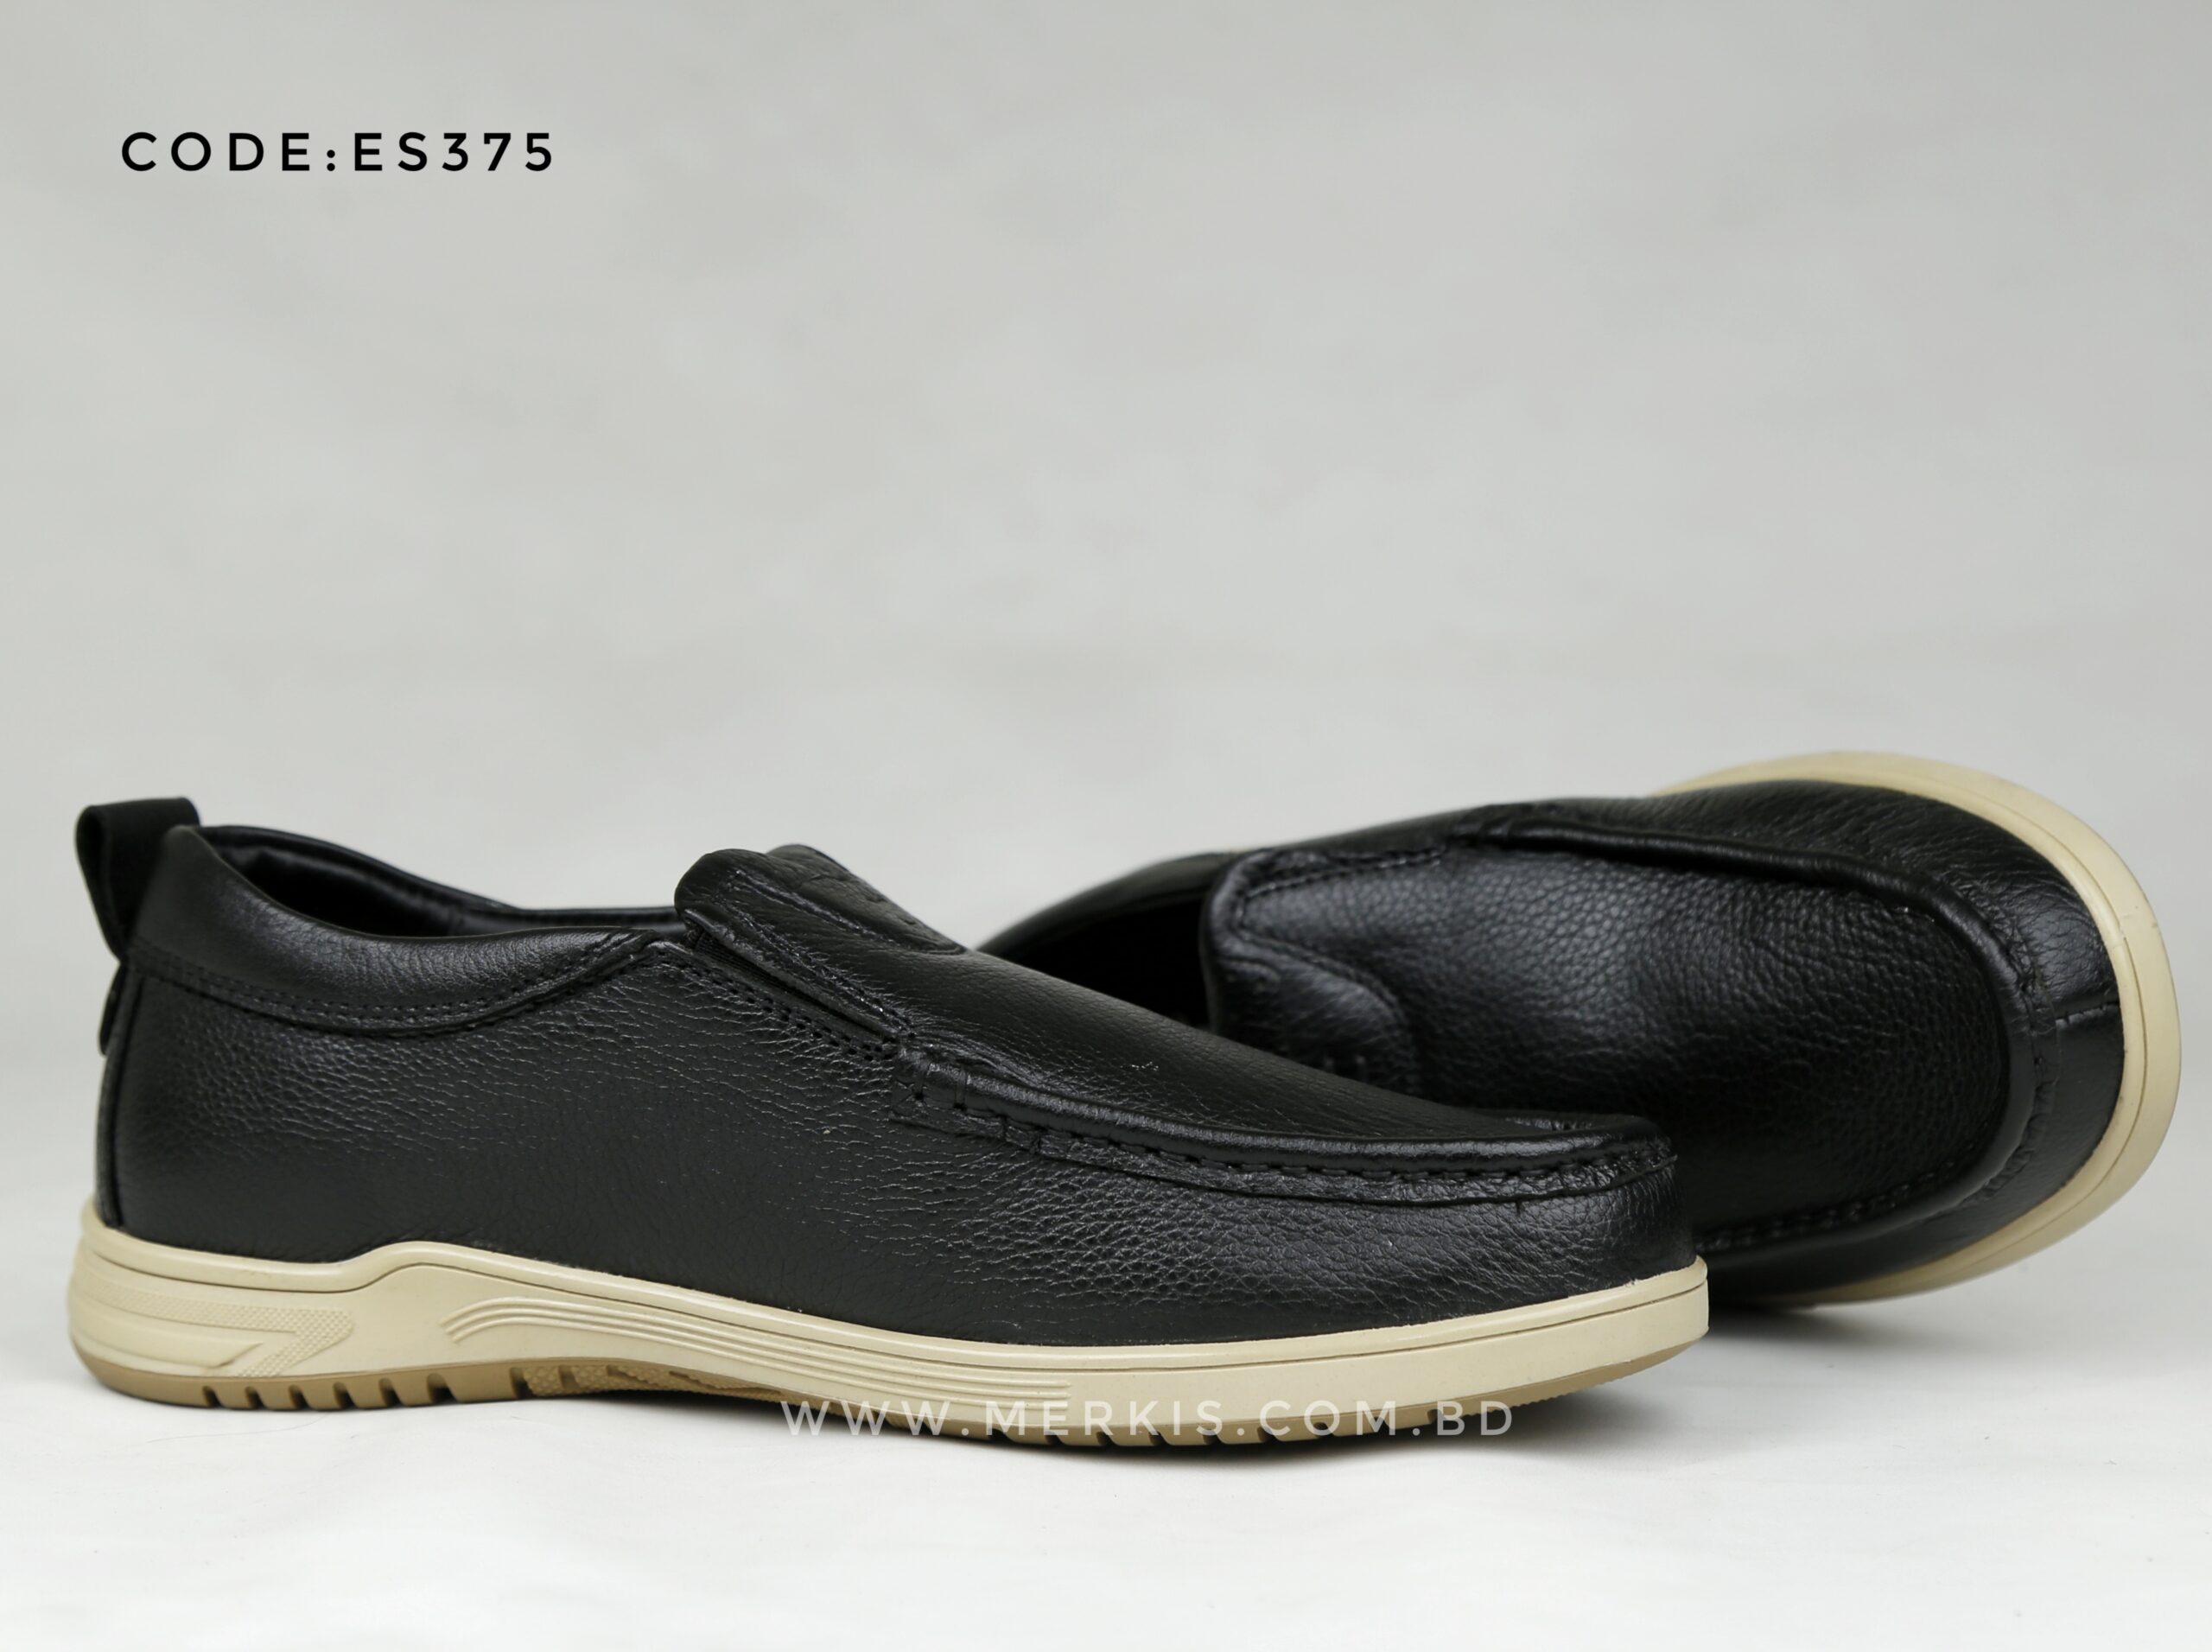 Awesome designable black royal cobra casual shoe for men bd